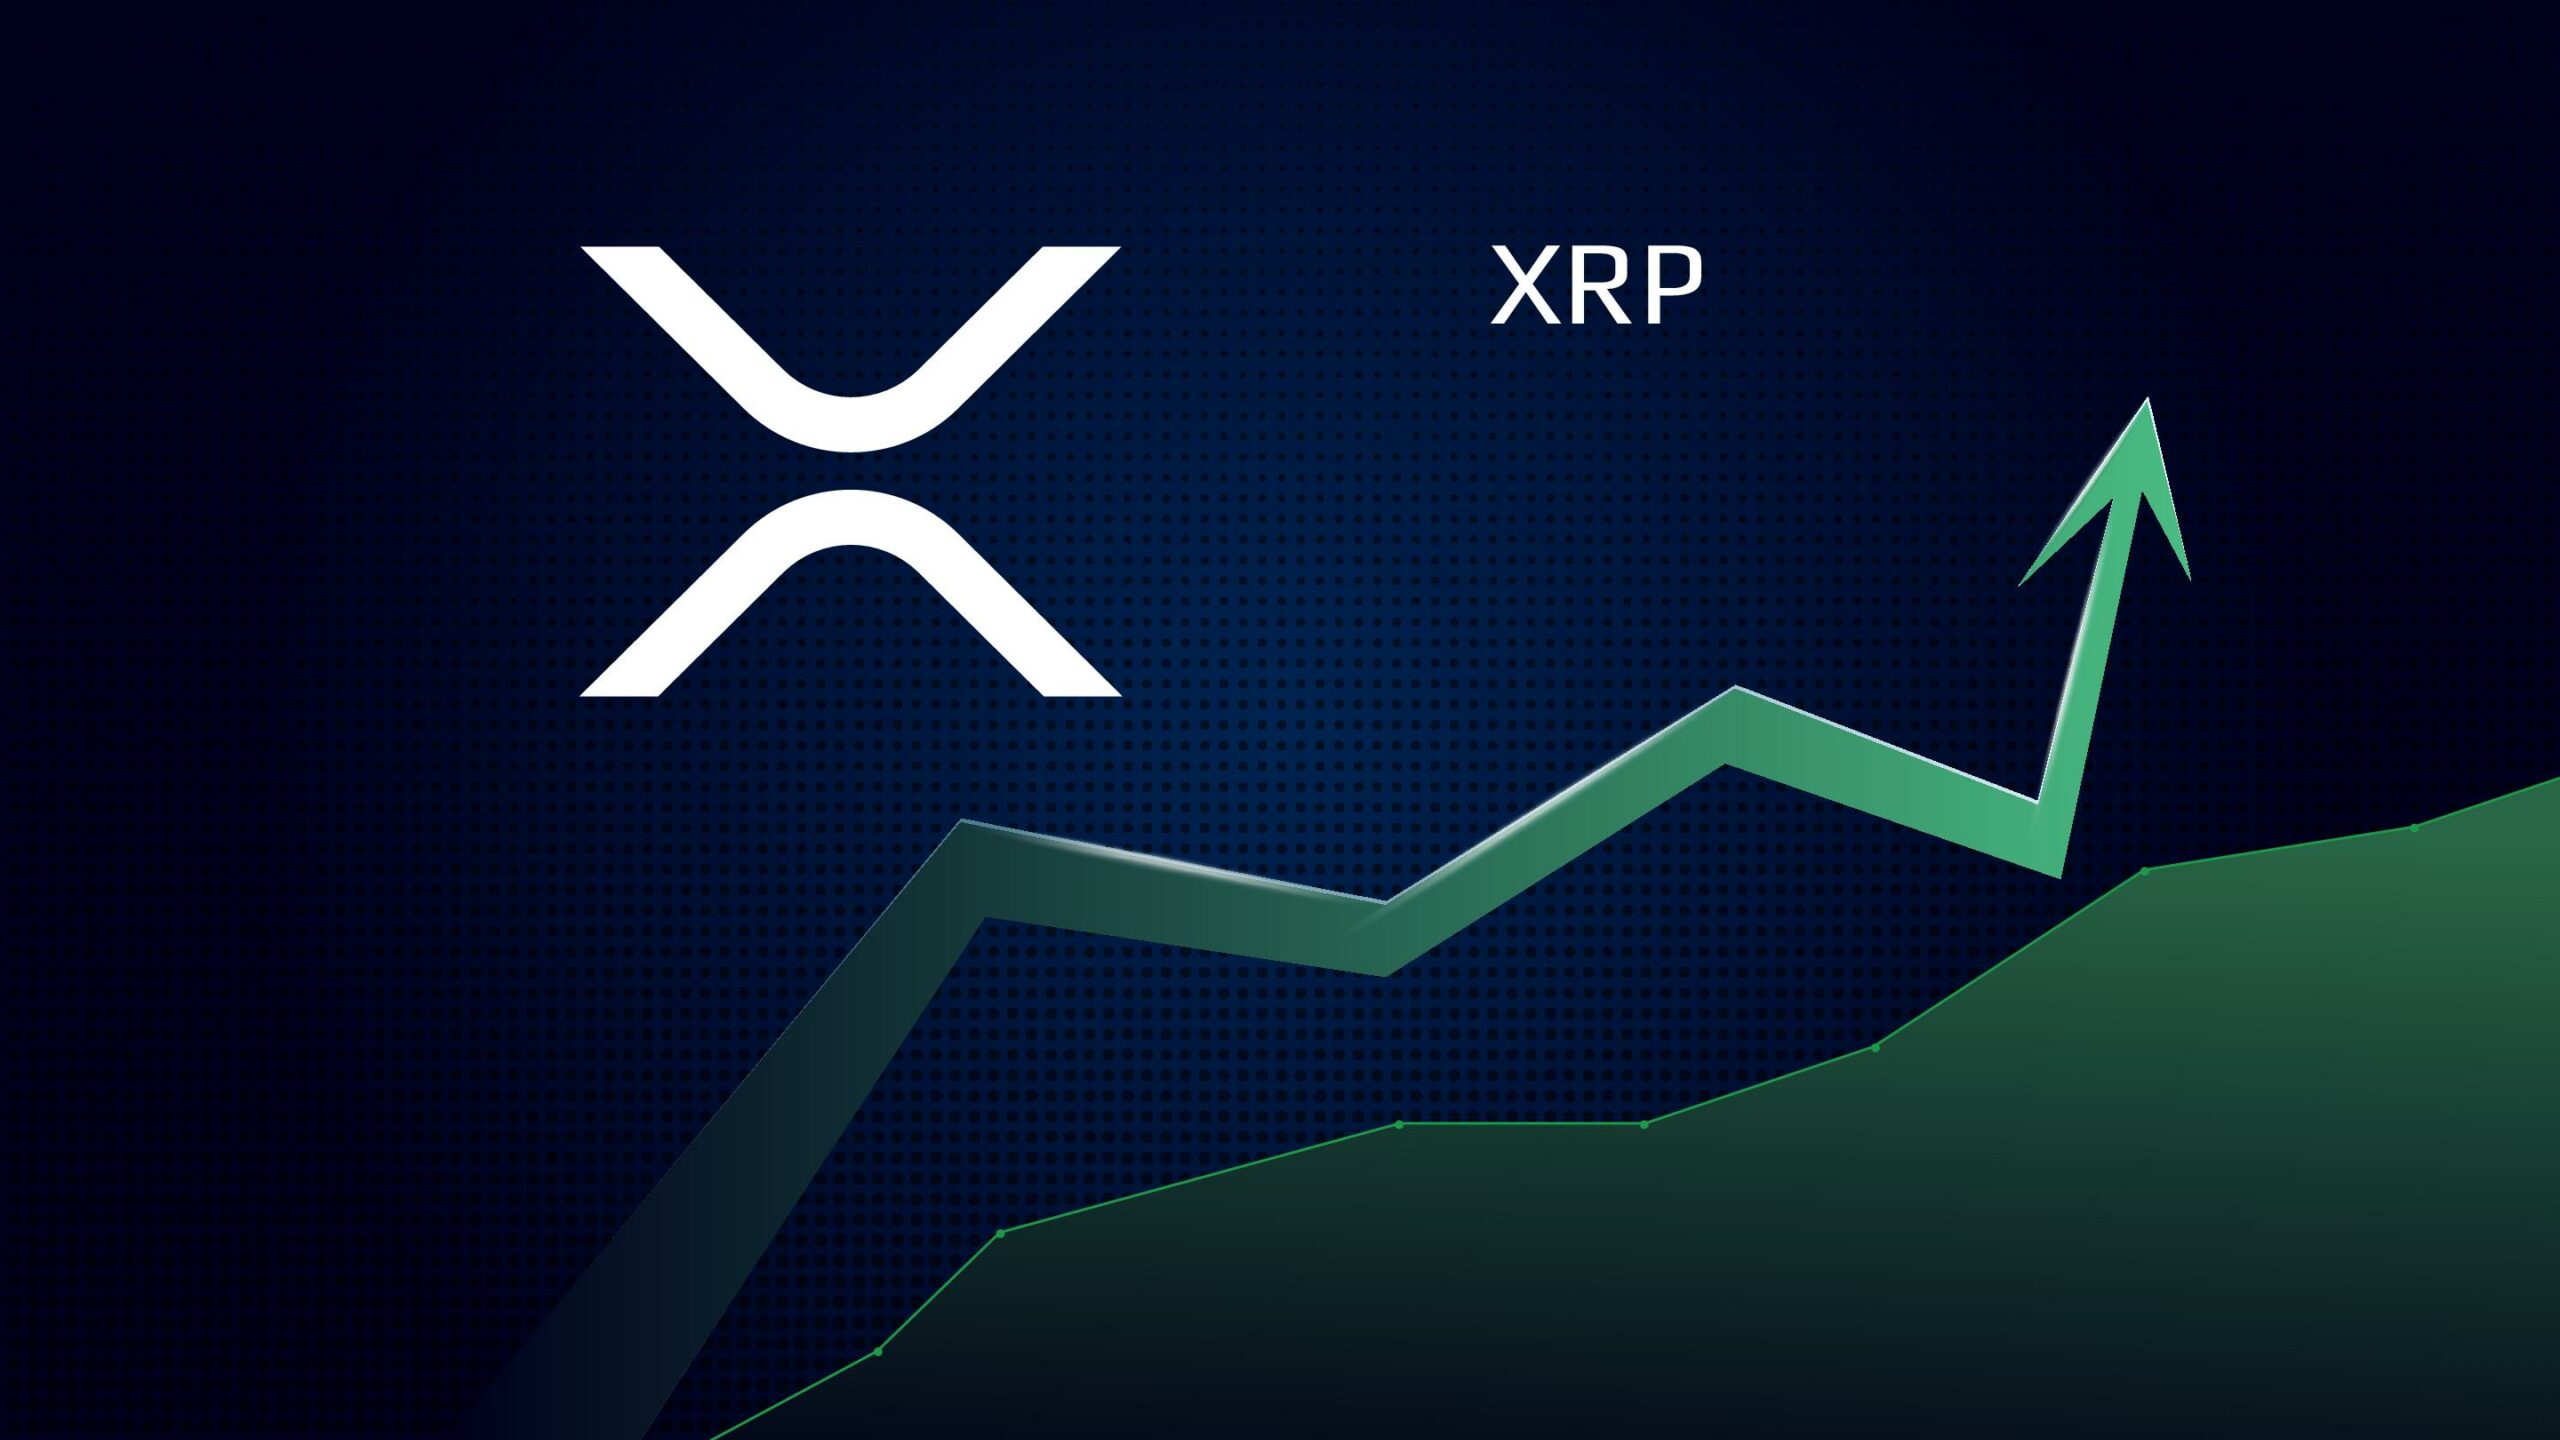 XRP price has painted impressive gains despite the choppy crypto market